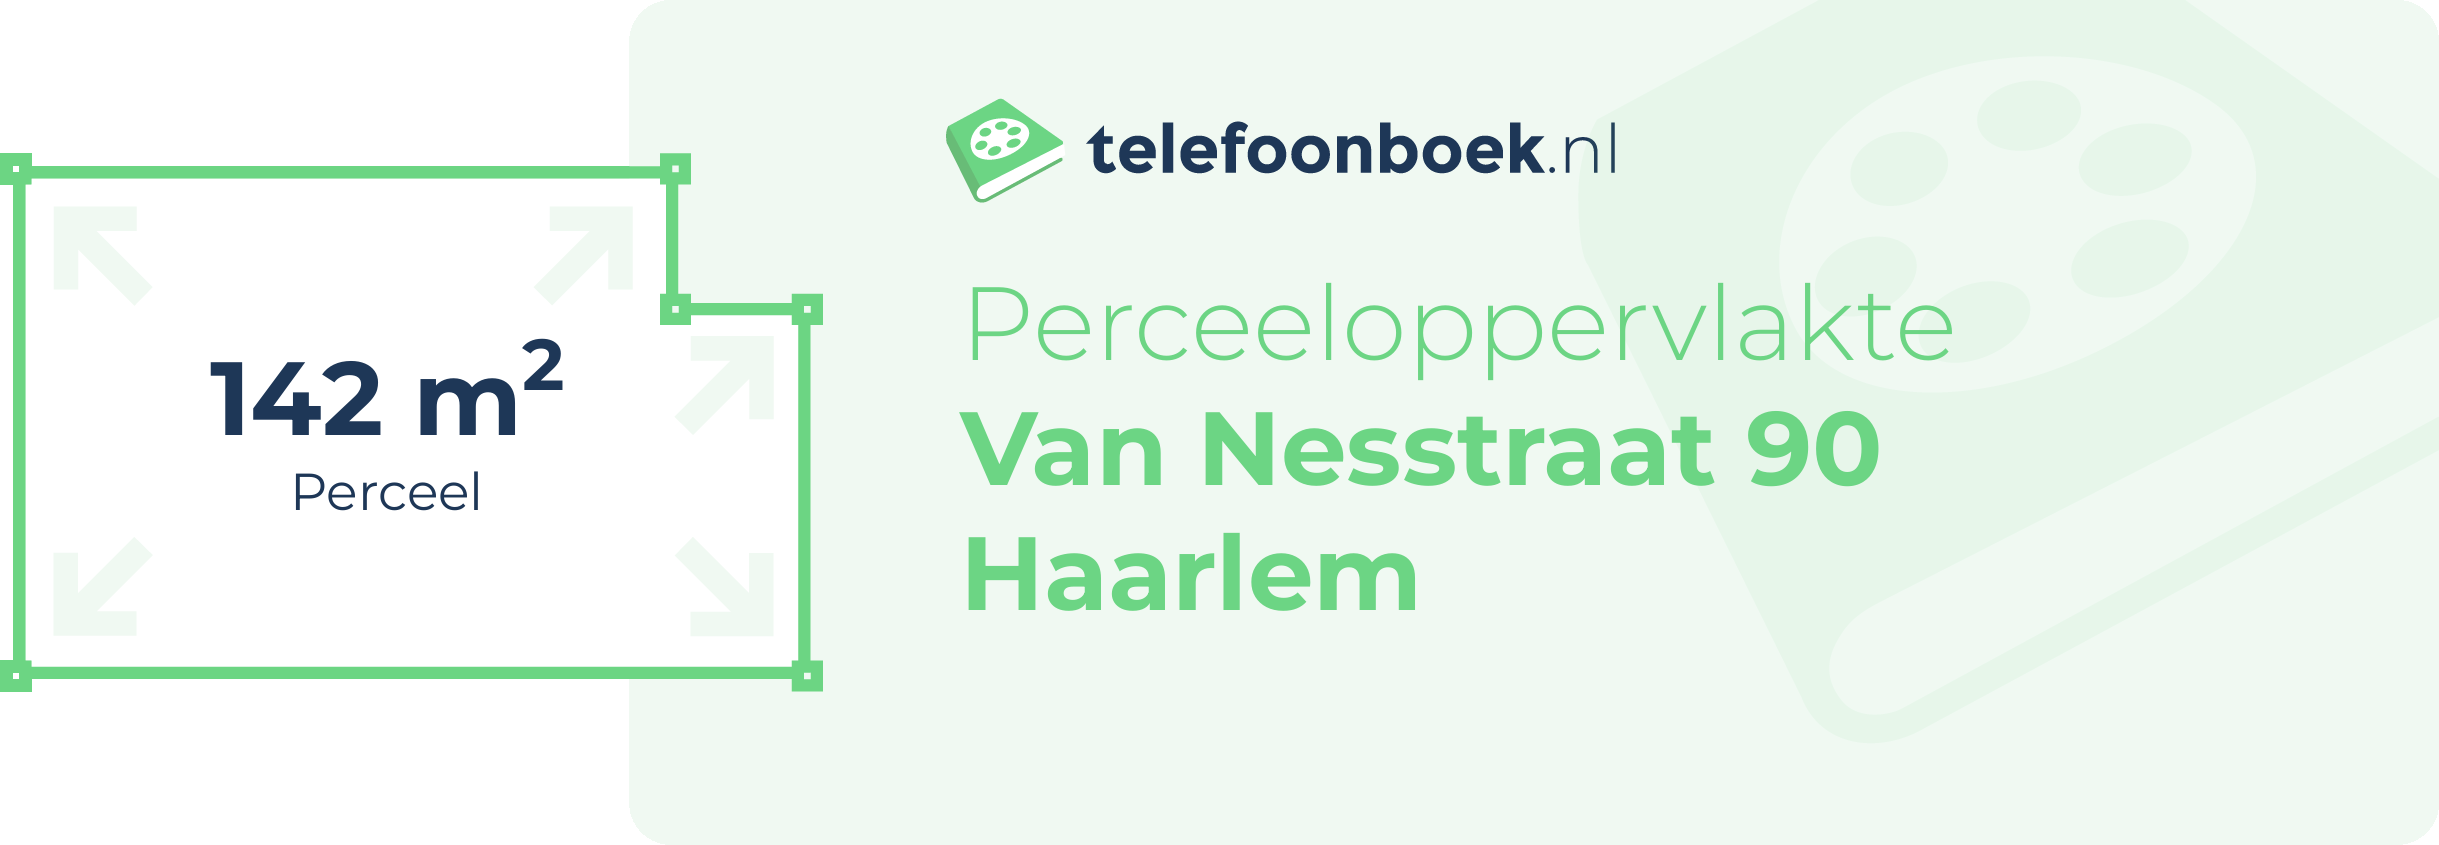 Perceeloppervlakte Van Nesstraat 90 Haarlem